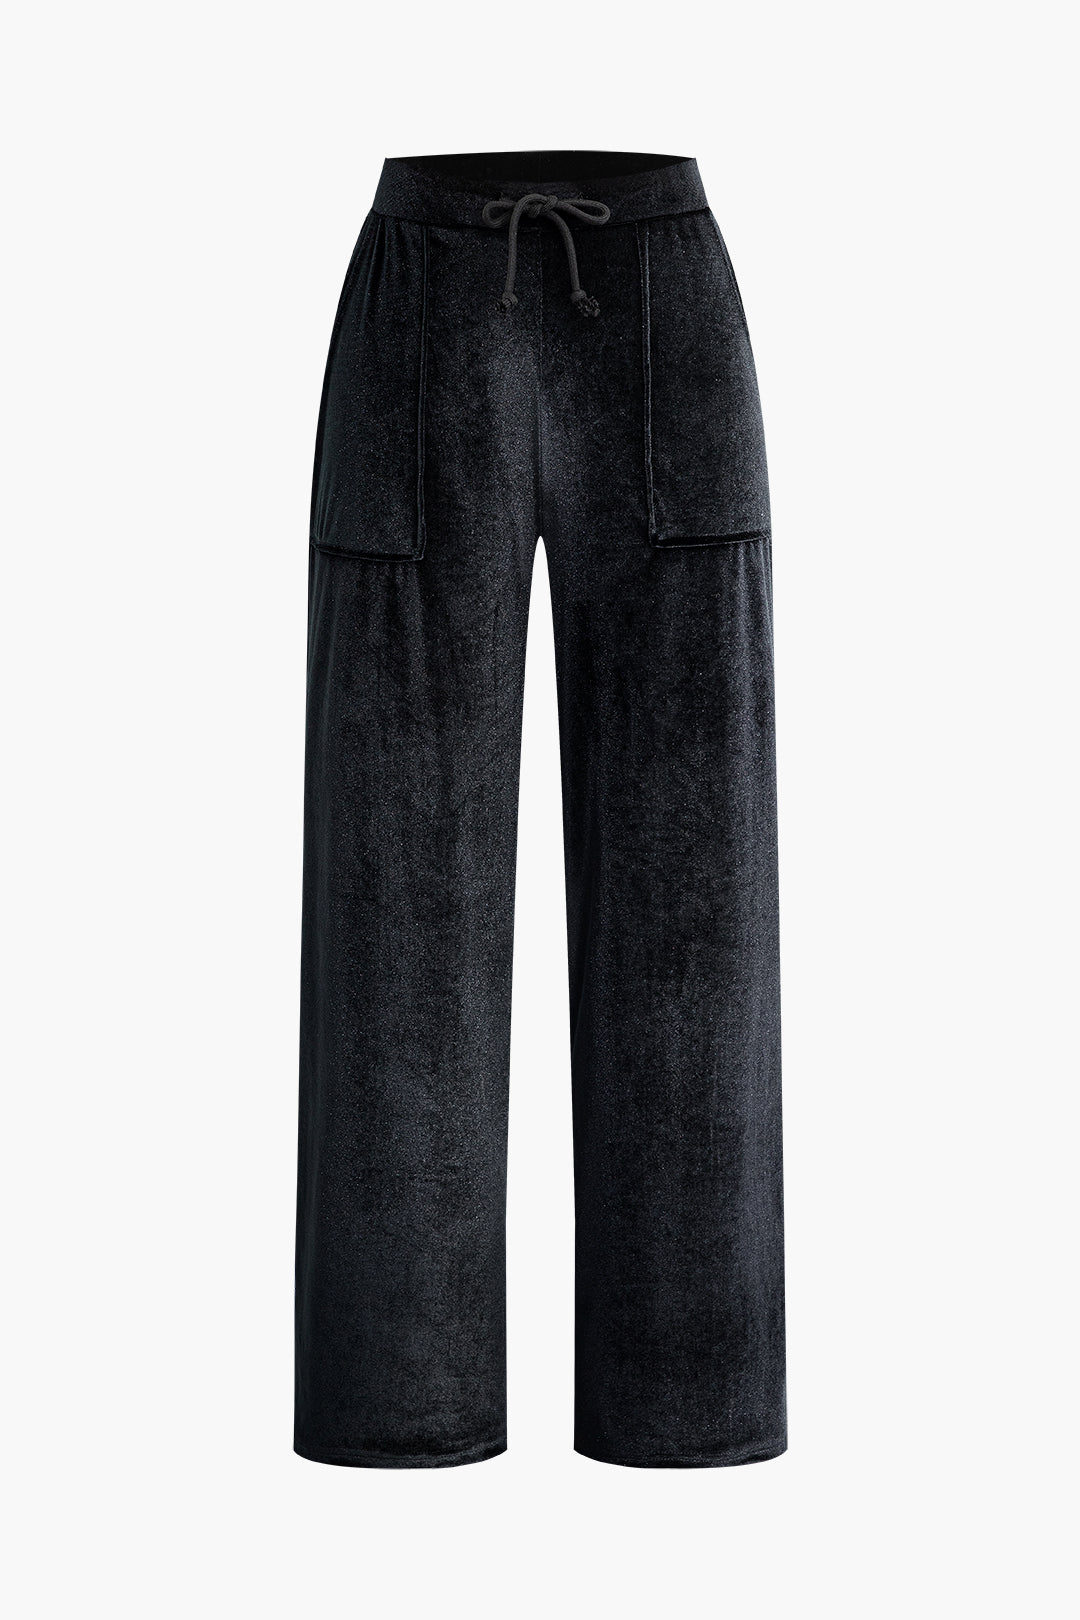 Velvet Drawstring Hooded Zipper Crop Top And Flap Pocket Straight Leg Pants Set